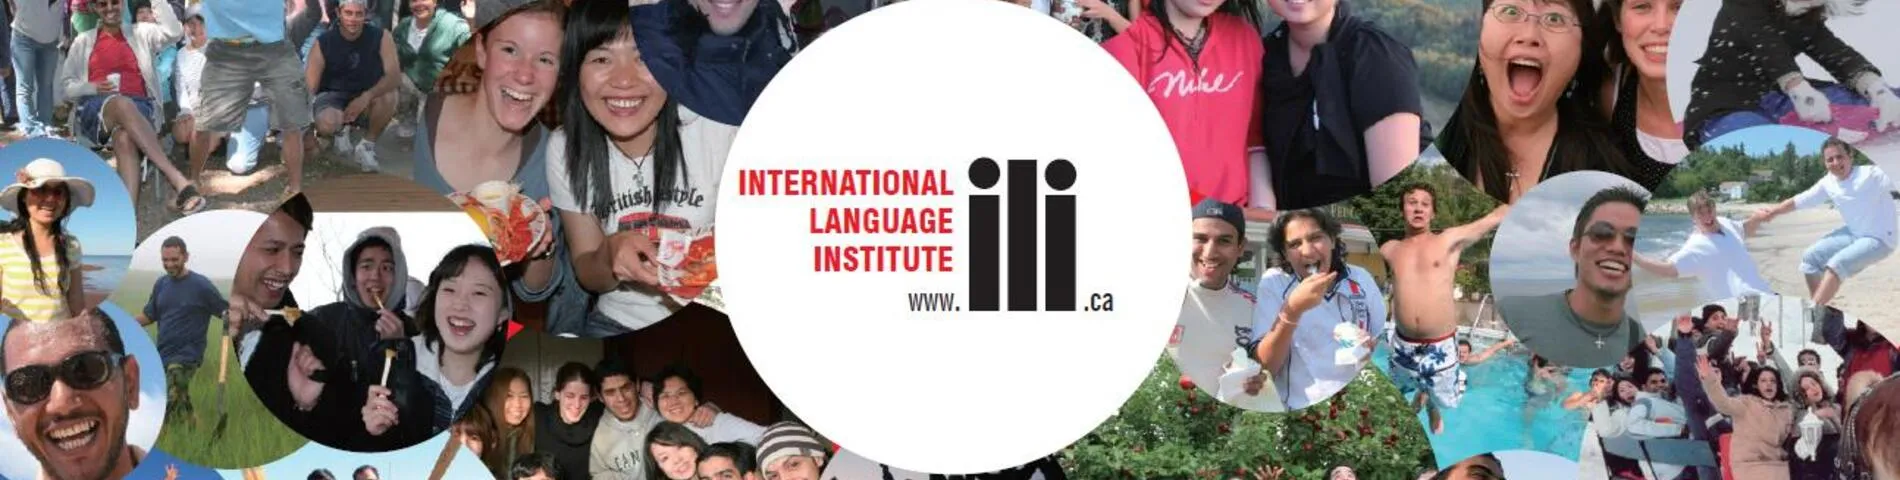 ILI - International Language Institute afbeelding 1